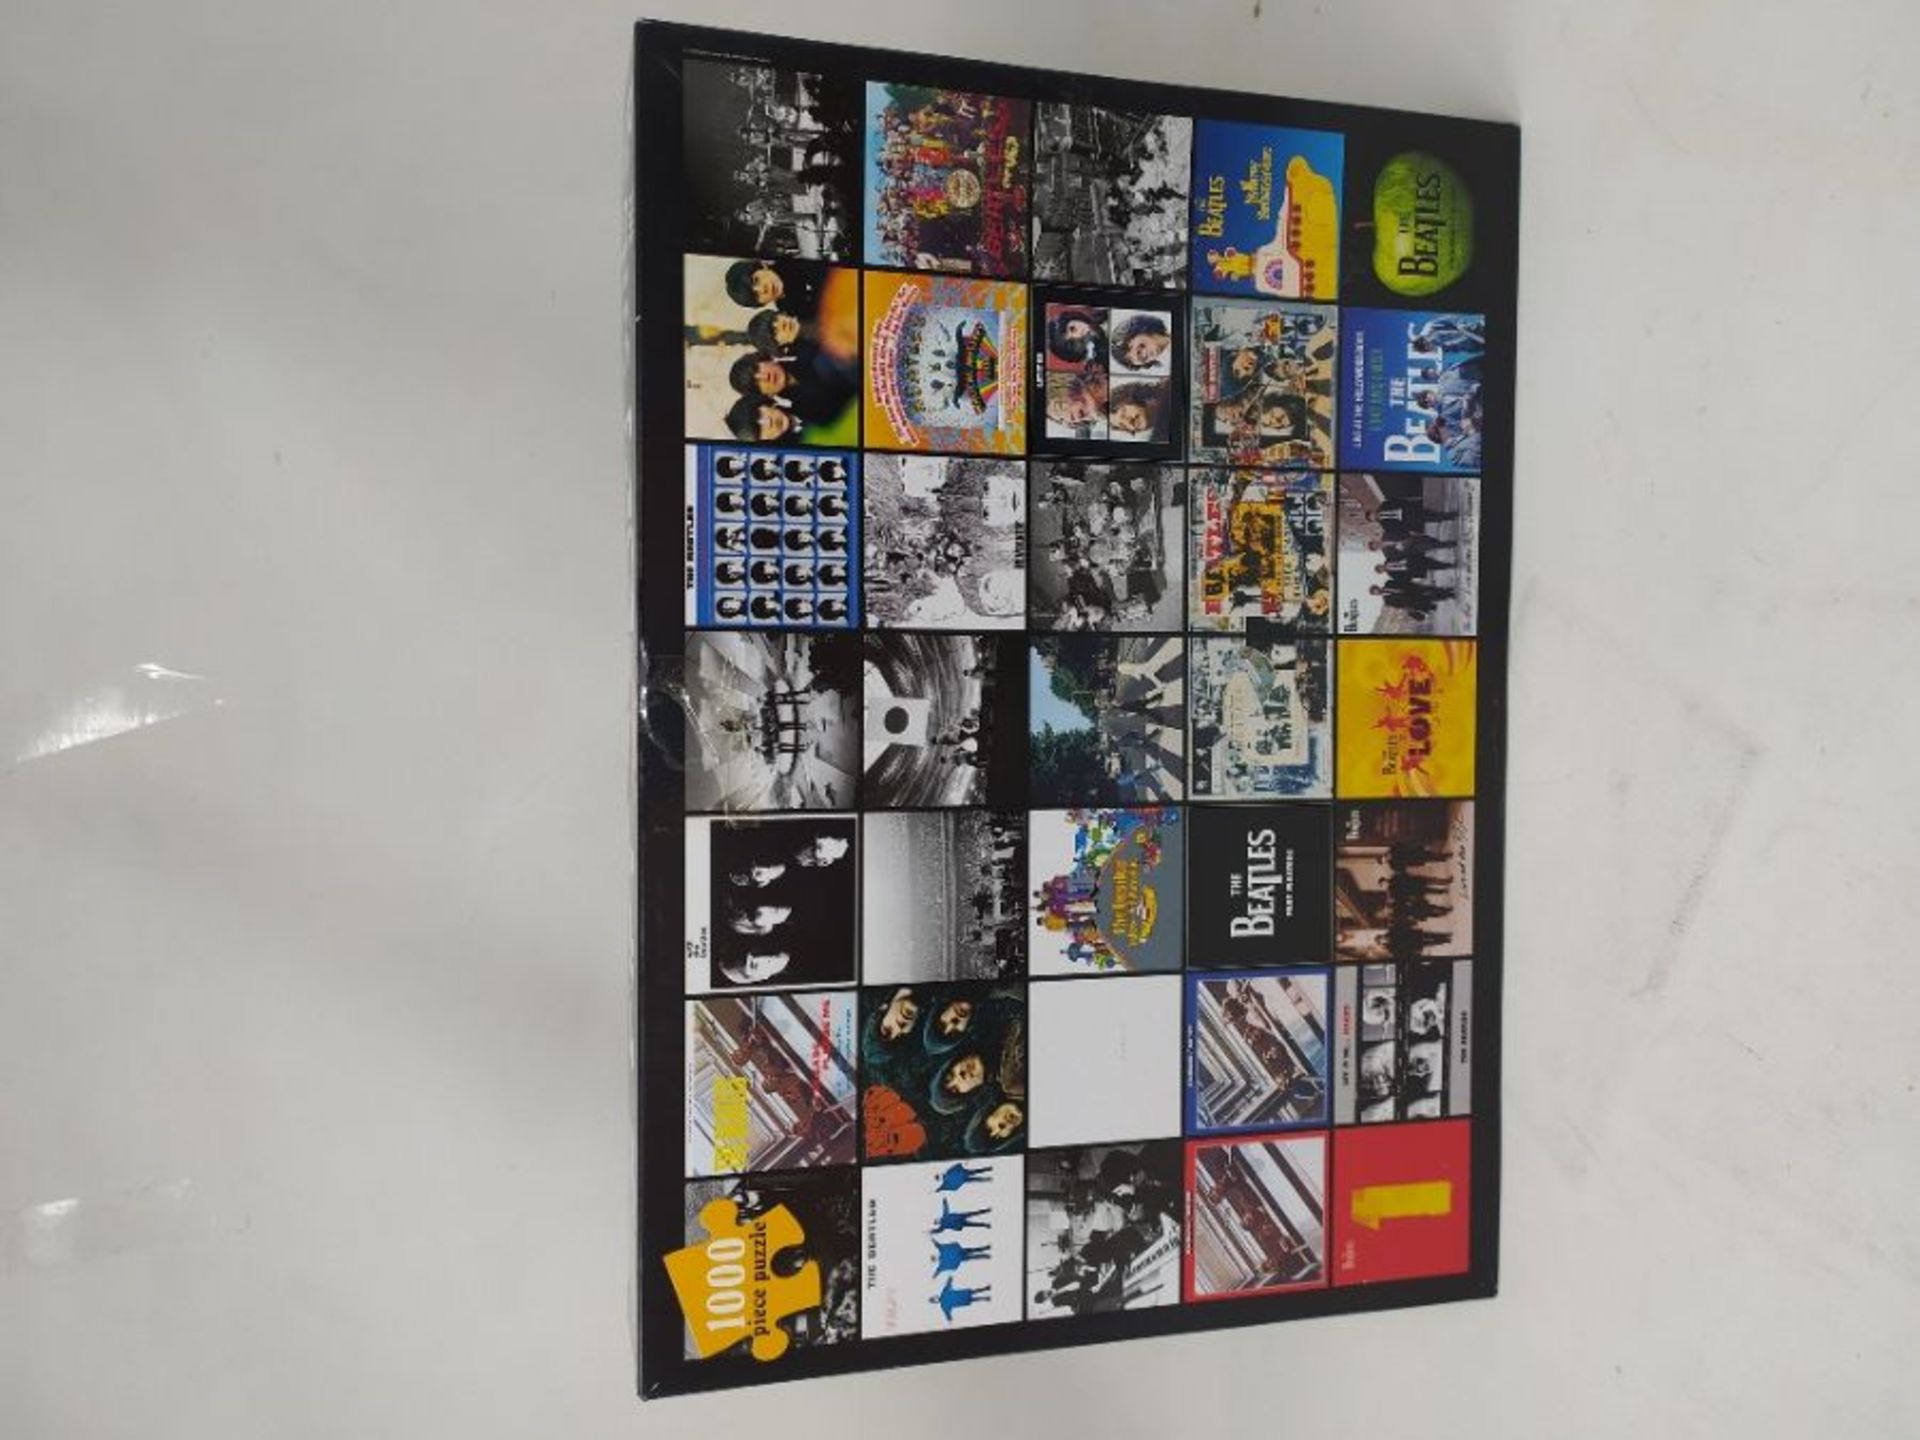 University Games 08409 The Beatles Album Covers 1000 Piece Puzzle - Image 2 of 2